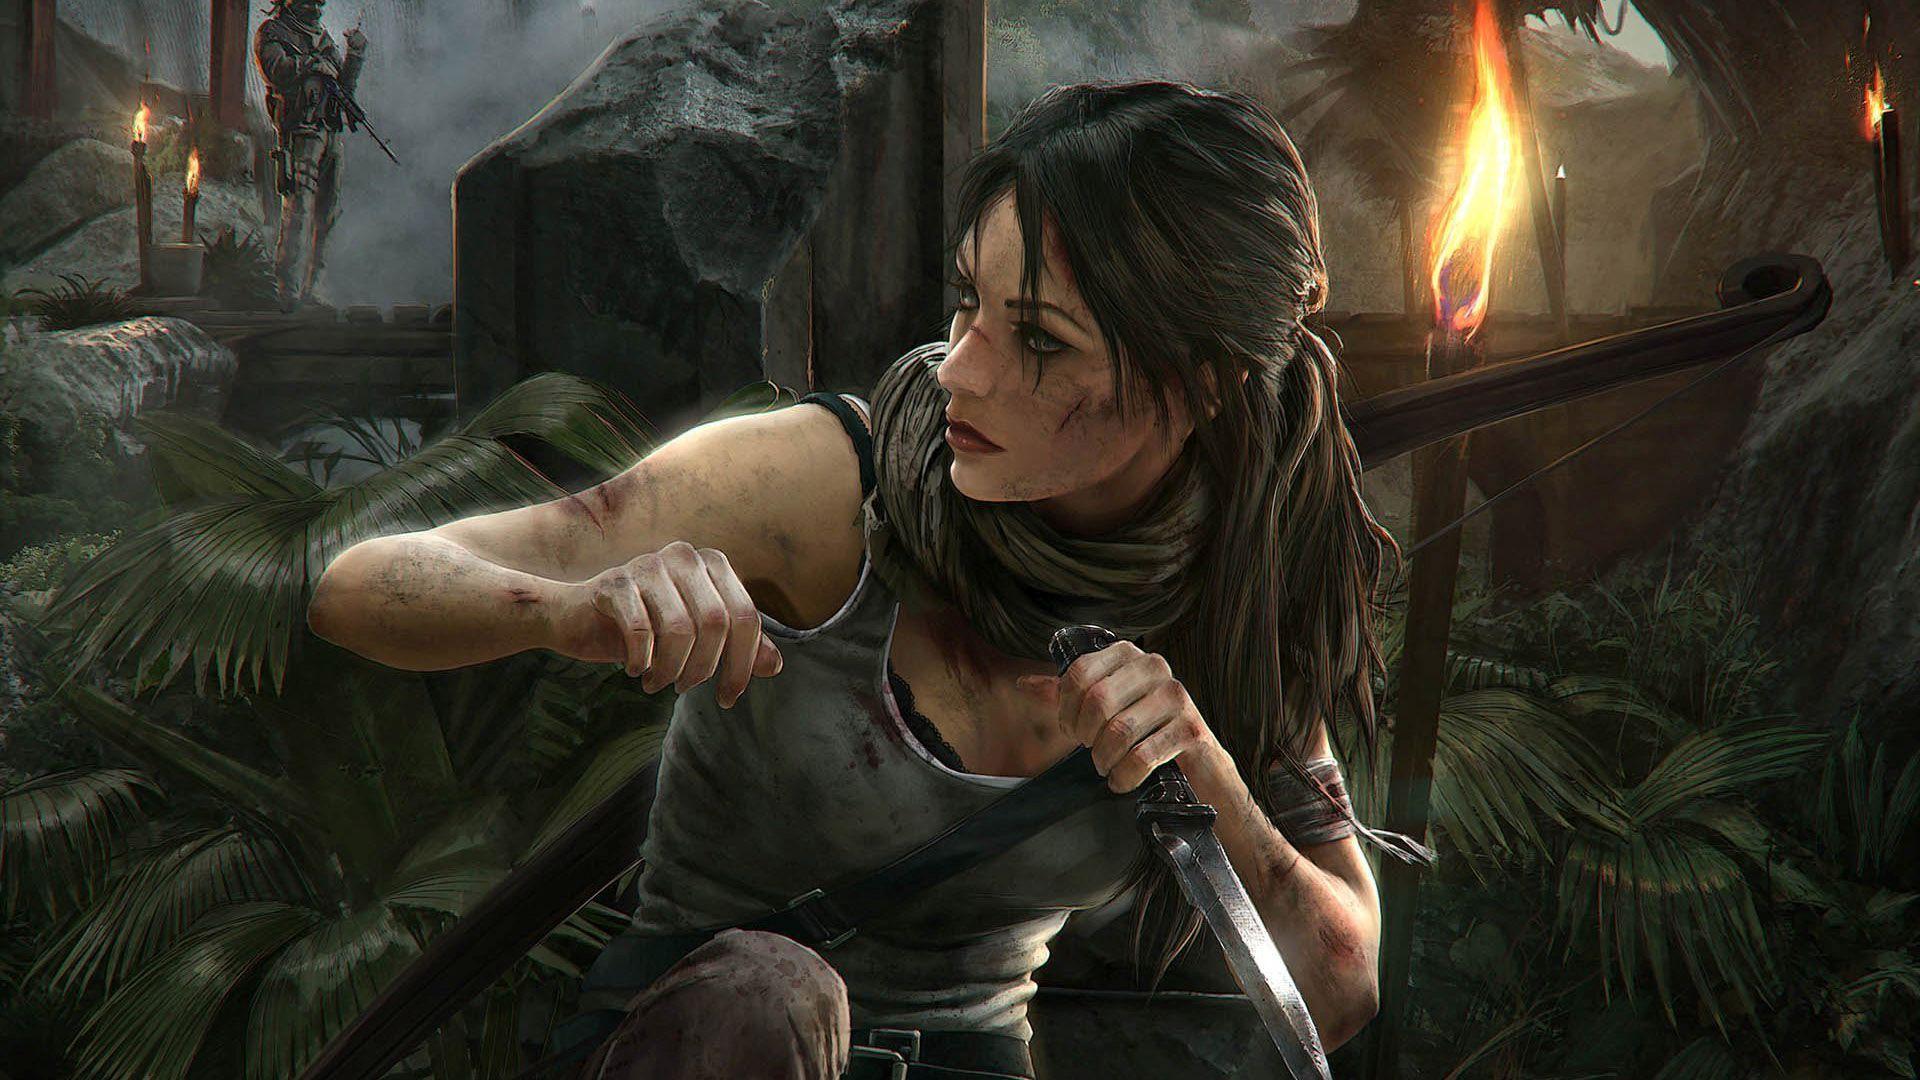 Chi era Lara Croft, l'eroina del videogame Tomb Raider